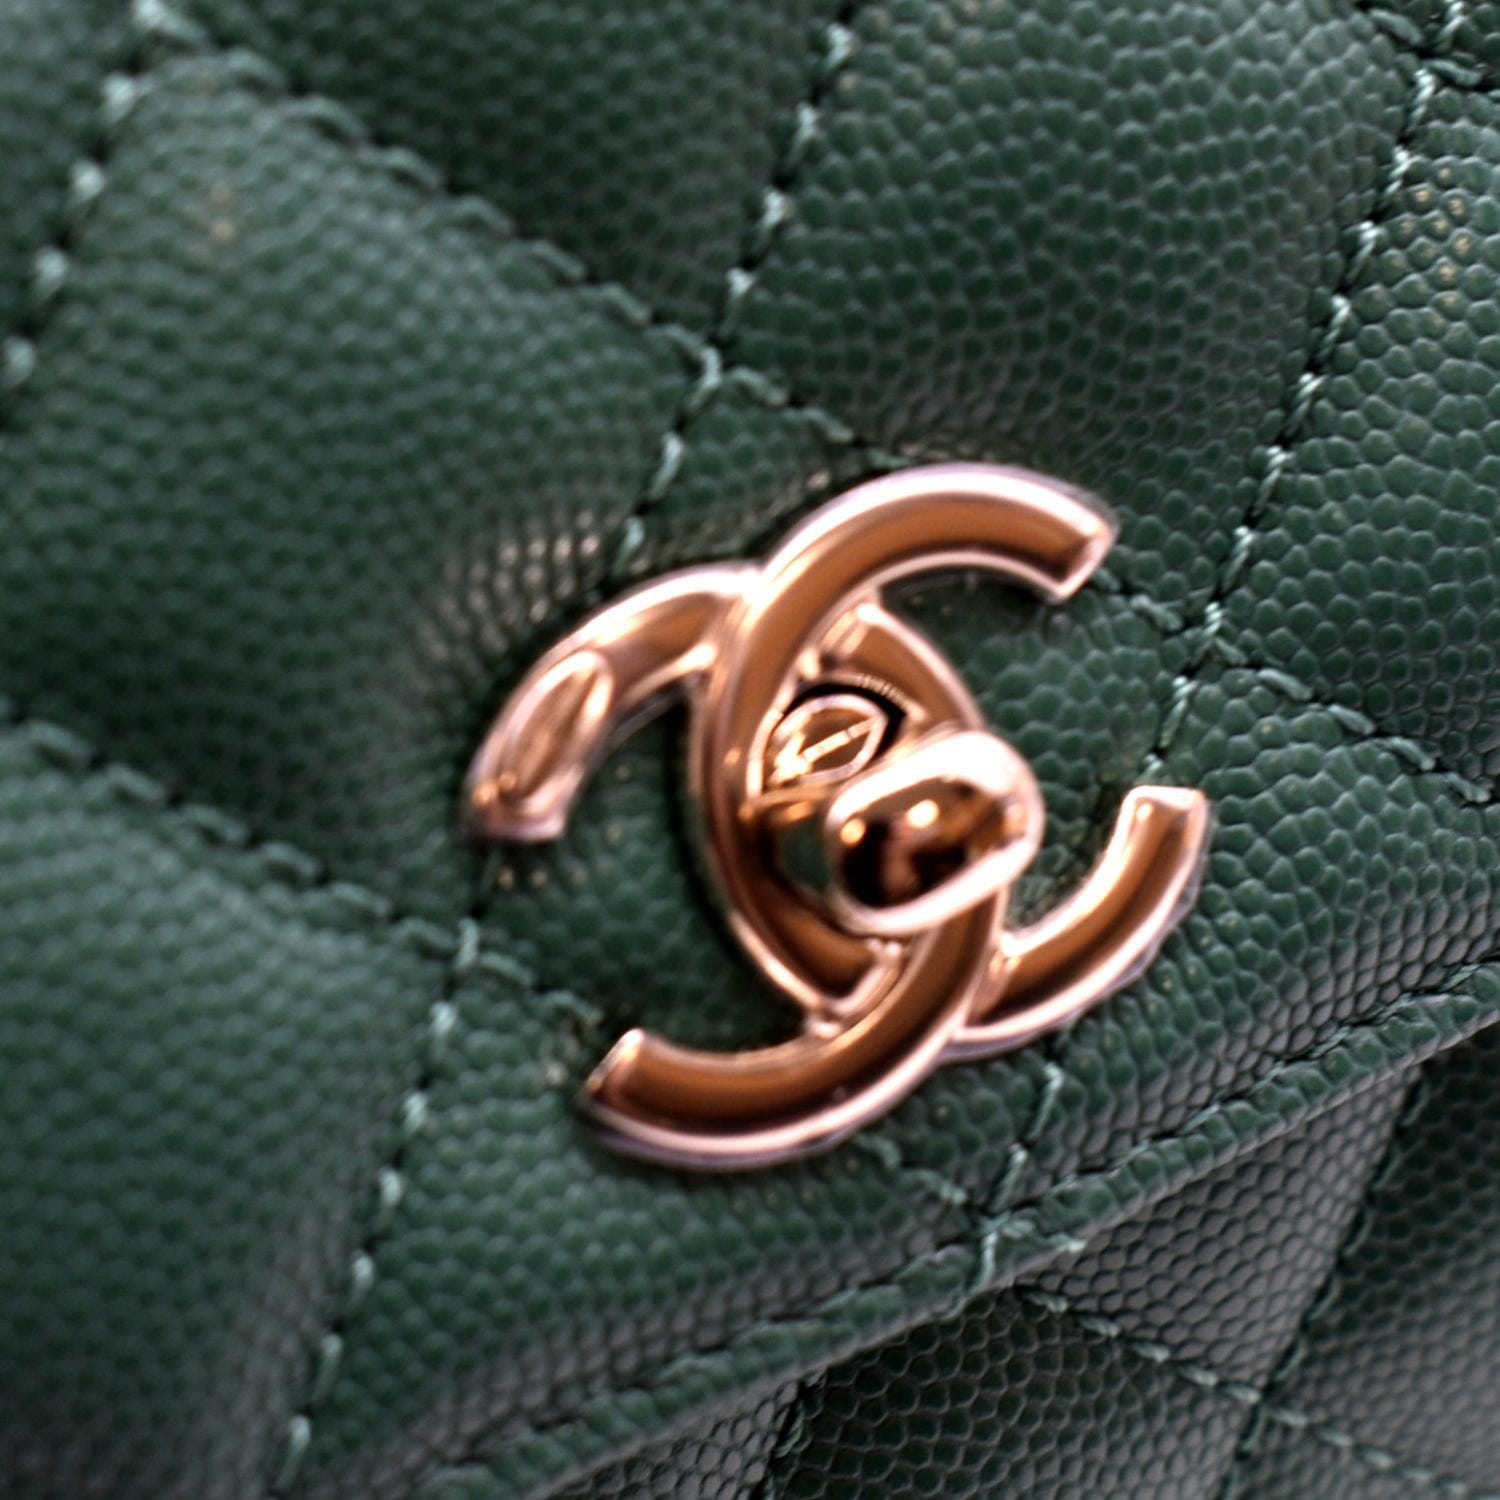 CHANEL Coco Mini Top Handle Caviar Leather Shoulder Bag Green